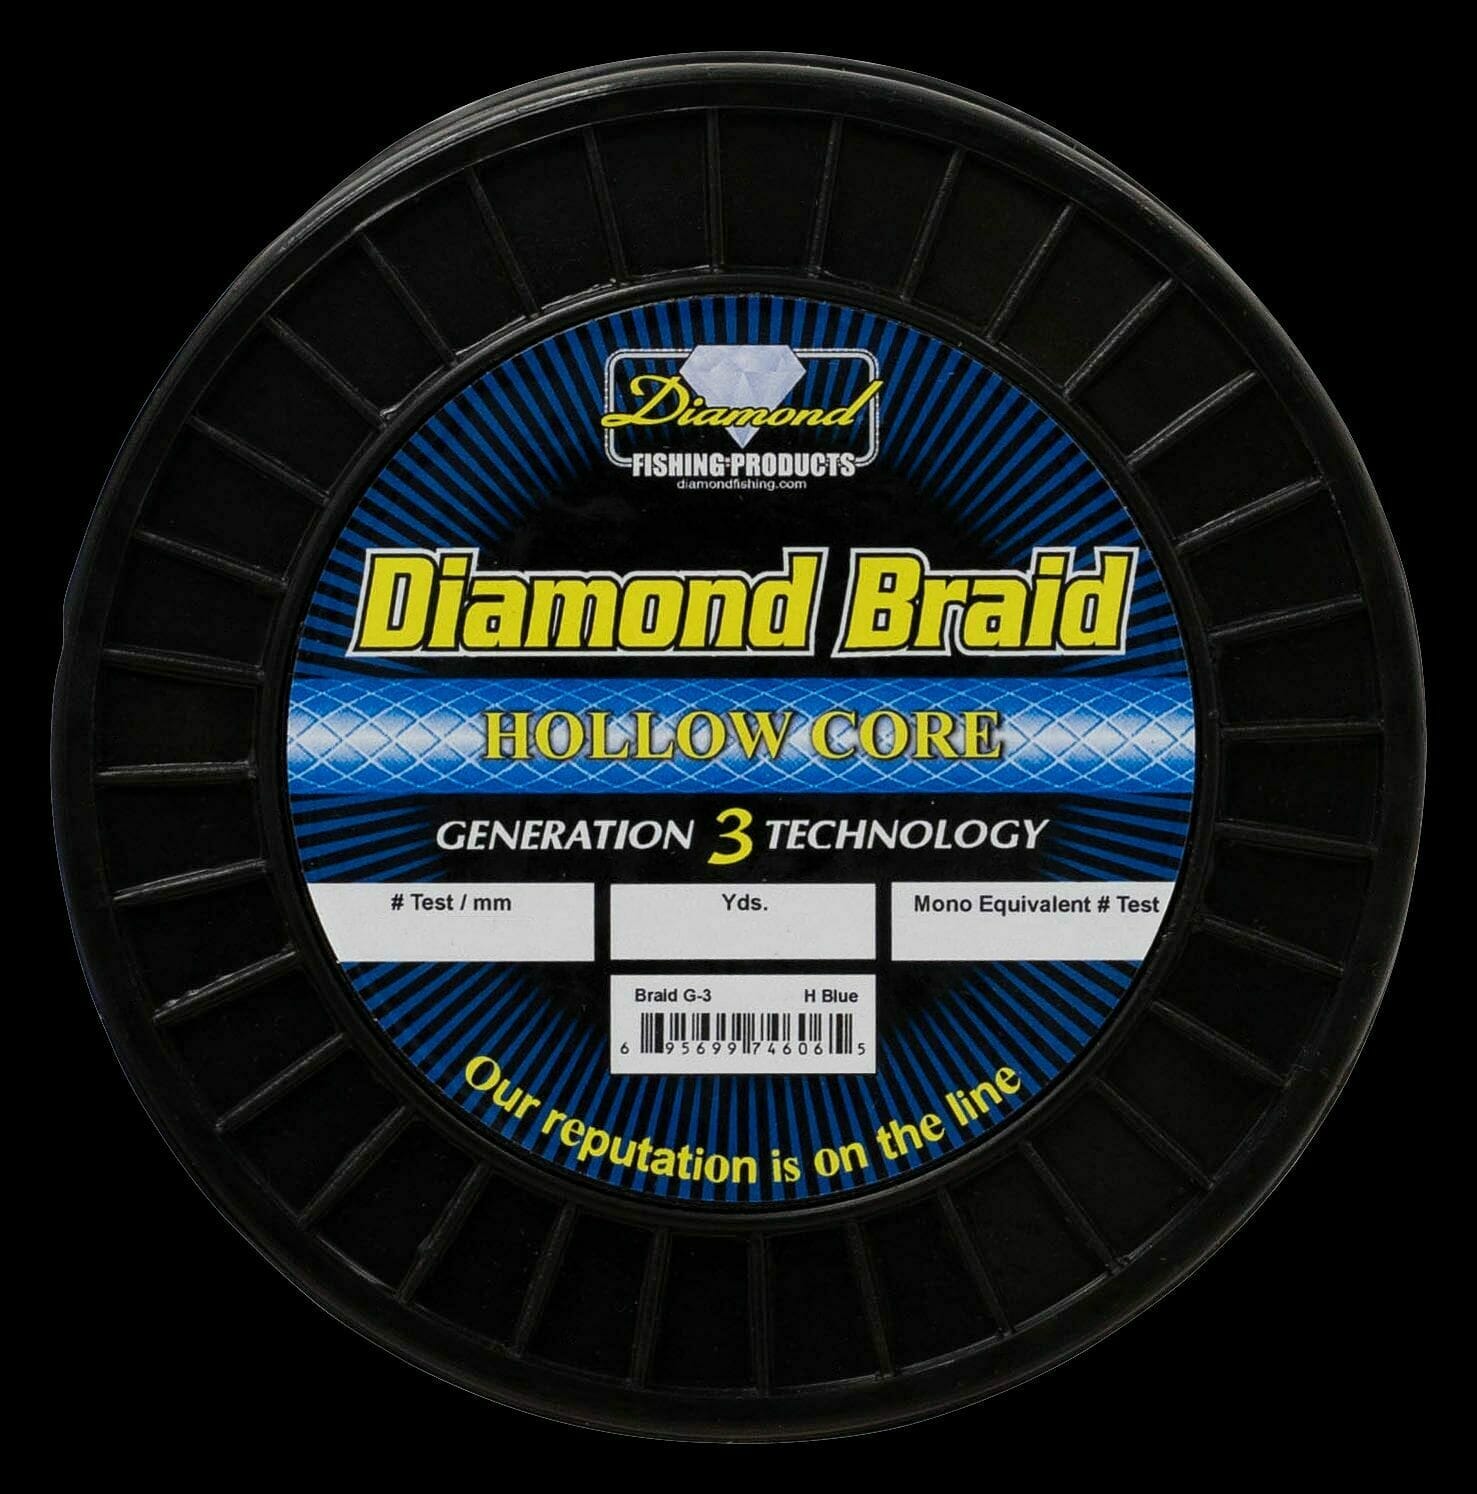 Diamond Braid Generation 3 Hollow Core Braided Fishing Line Review